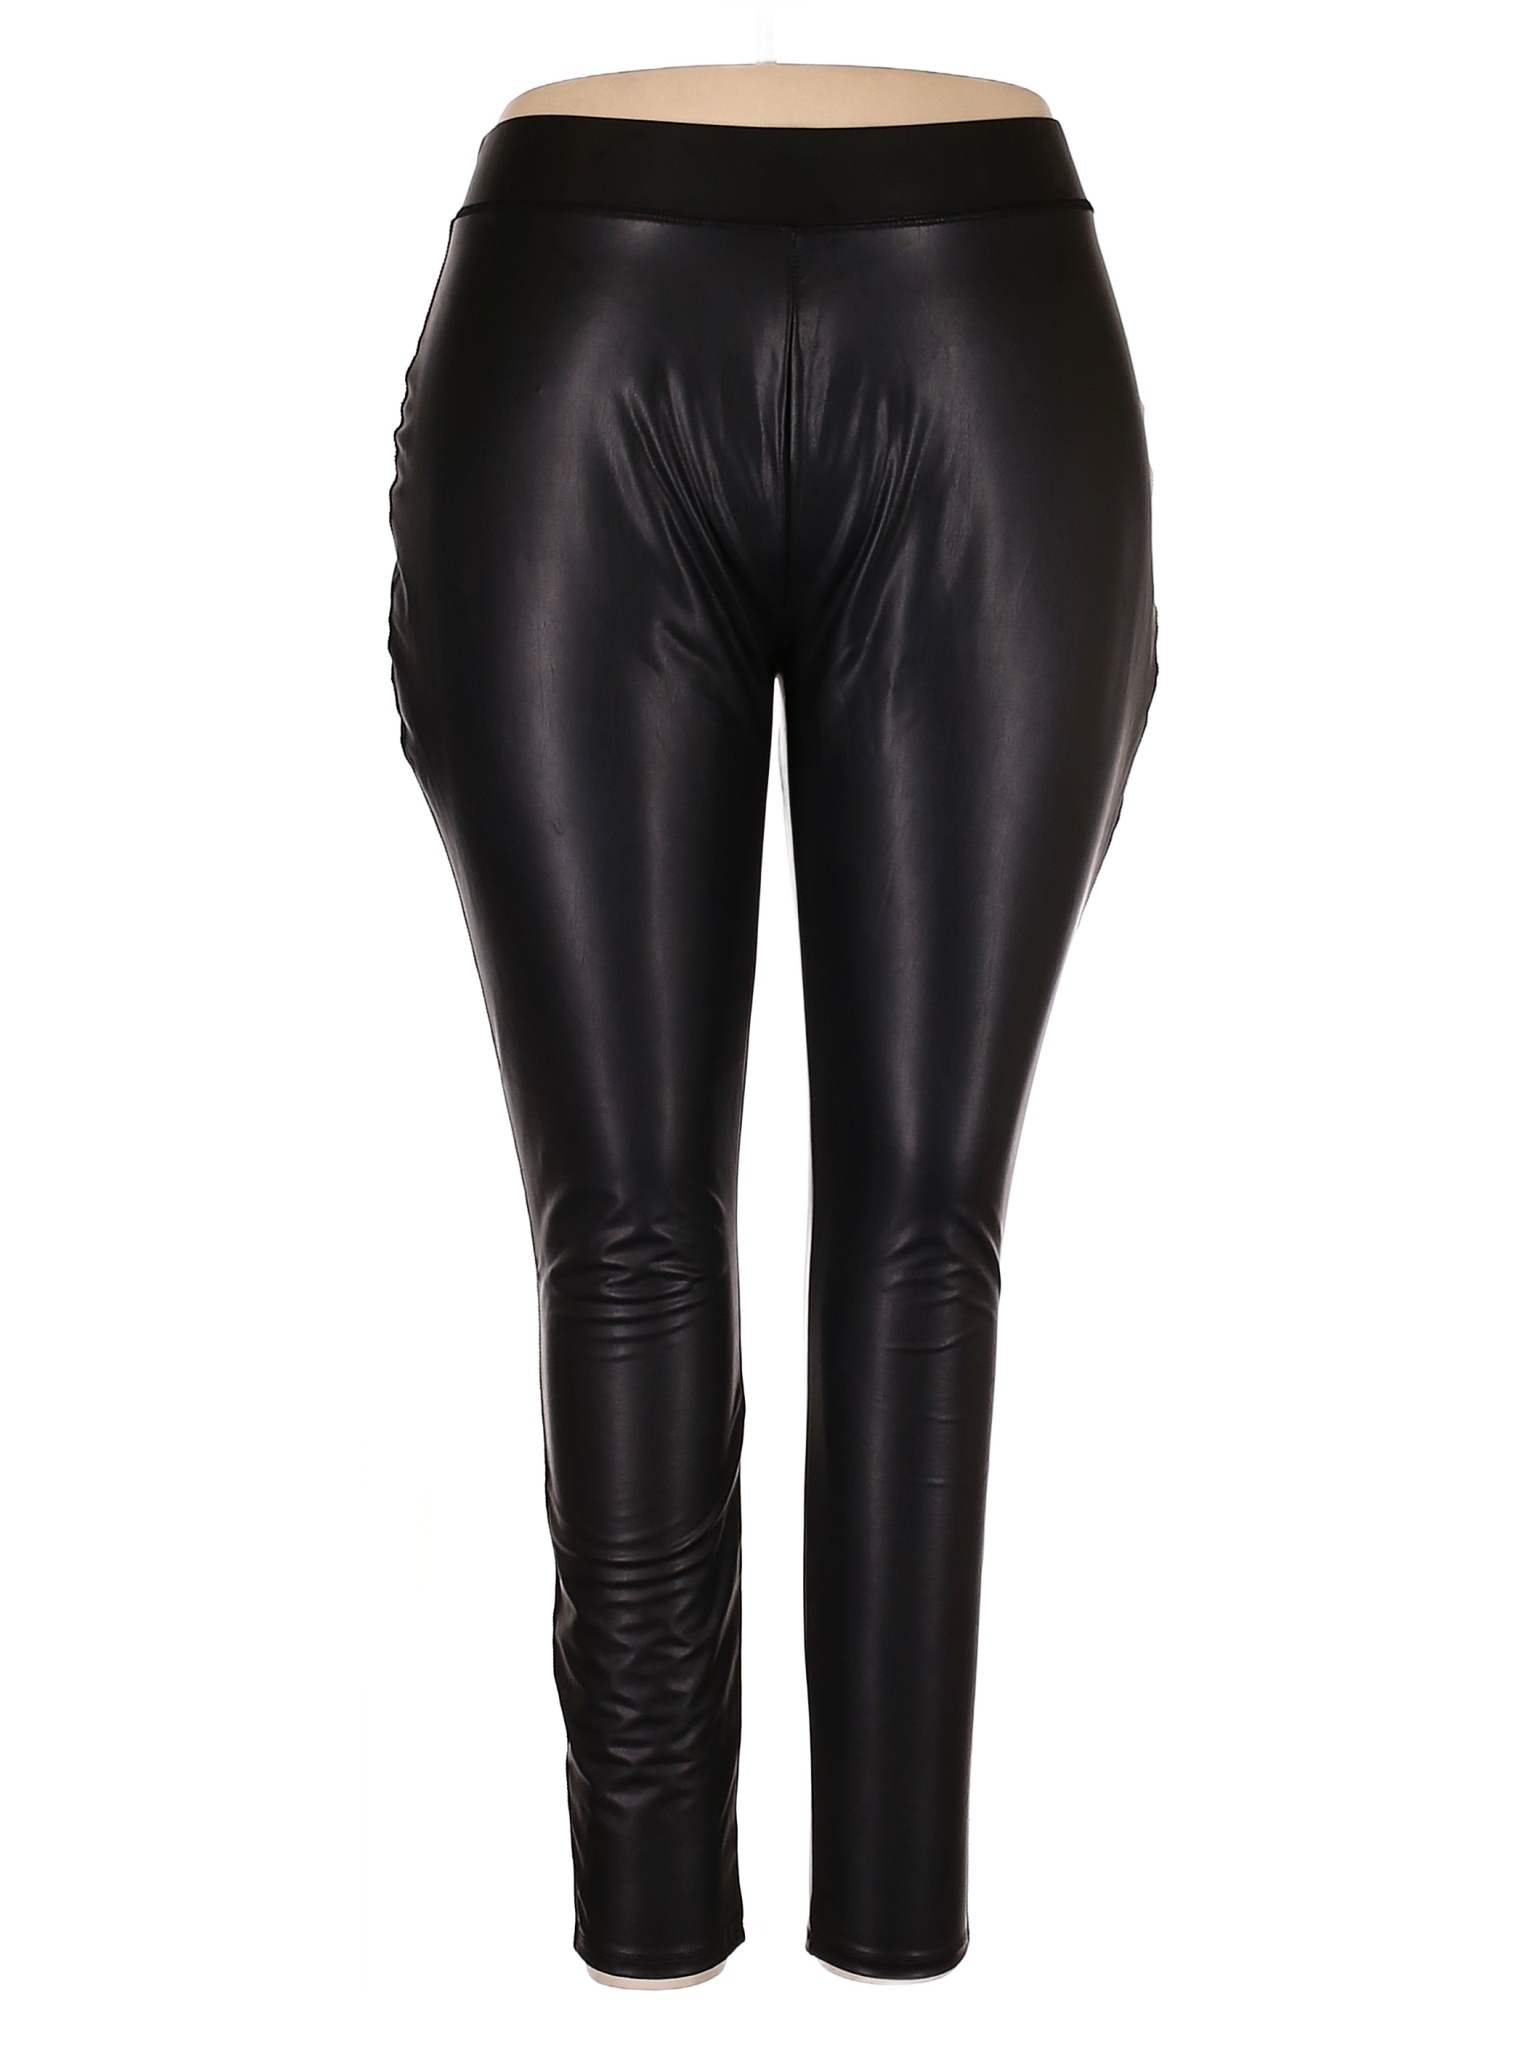 Ashley Stewart 100% Polyurethane Solid Black Faux Leather Pants Size 22 ...